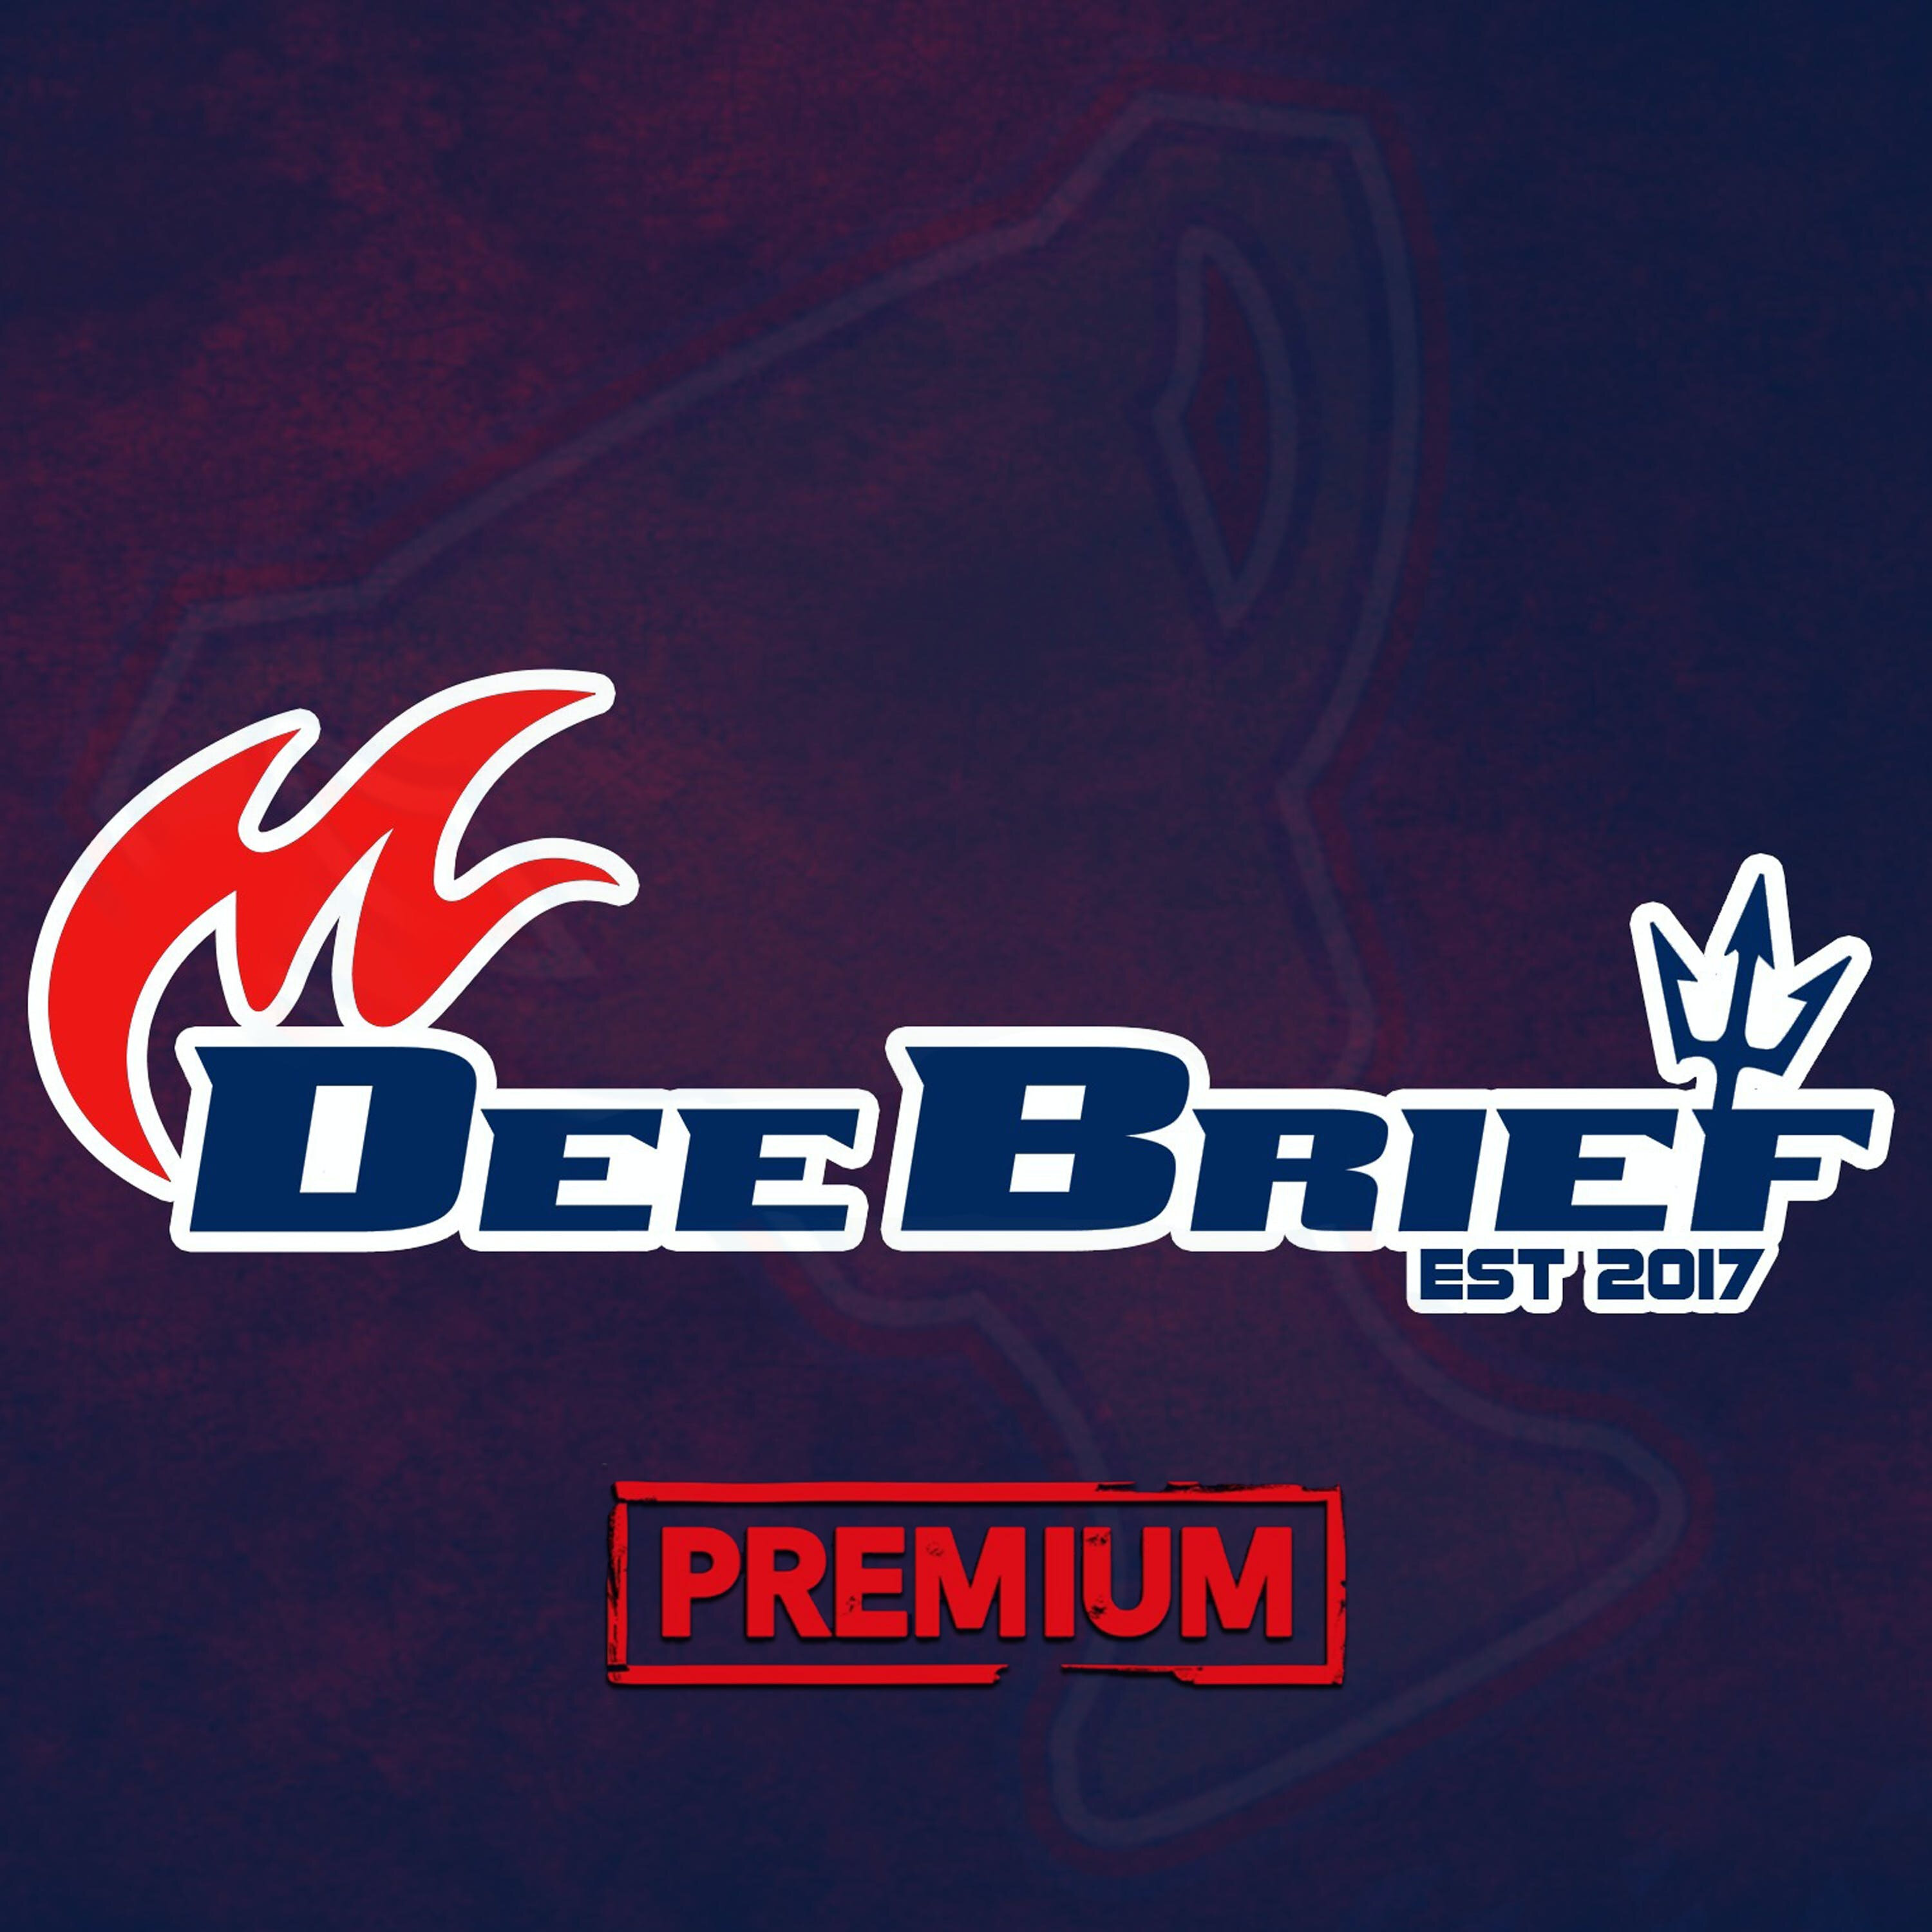 The DeeBrief Premium podcast tile